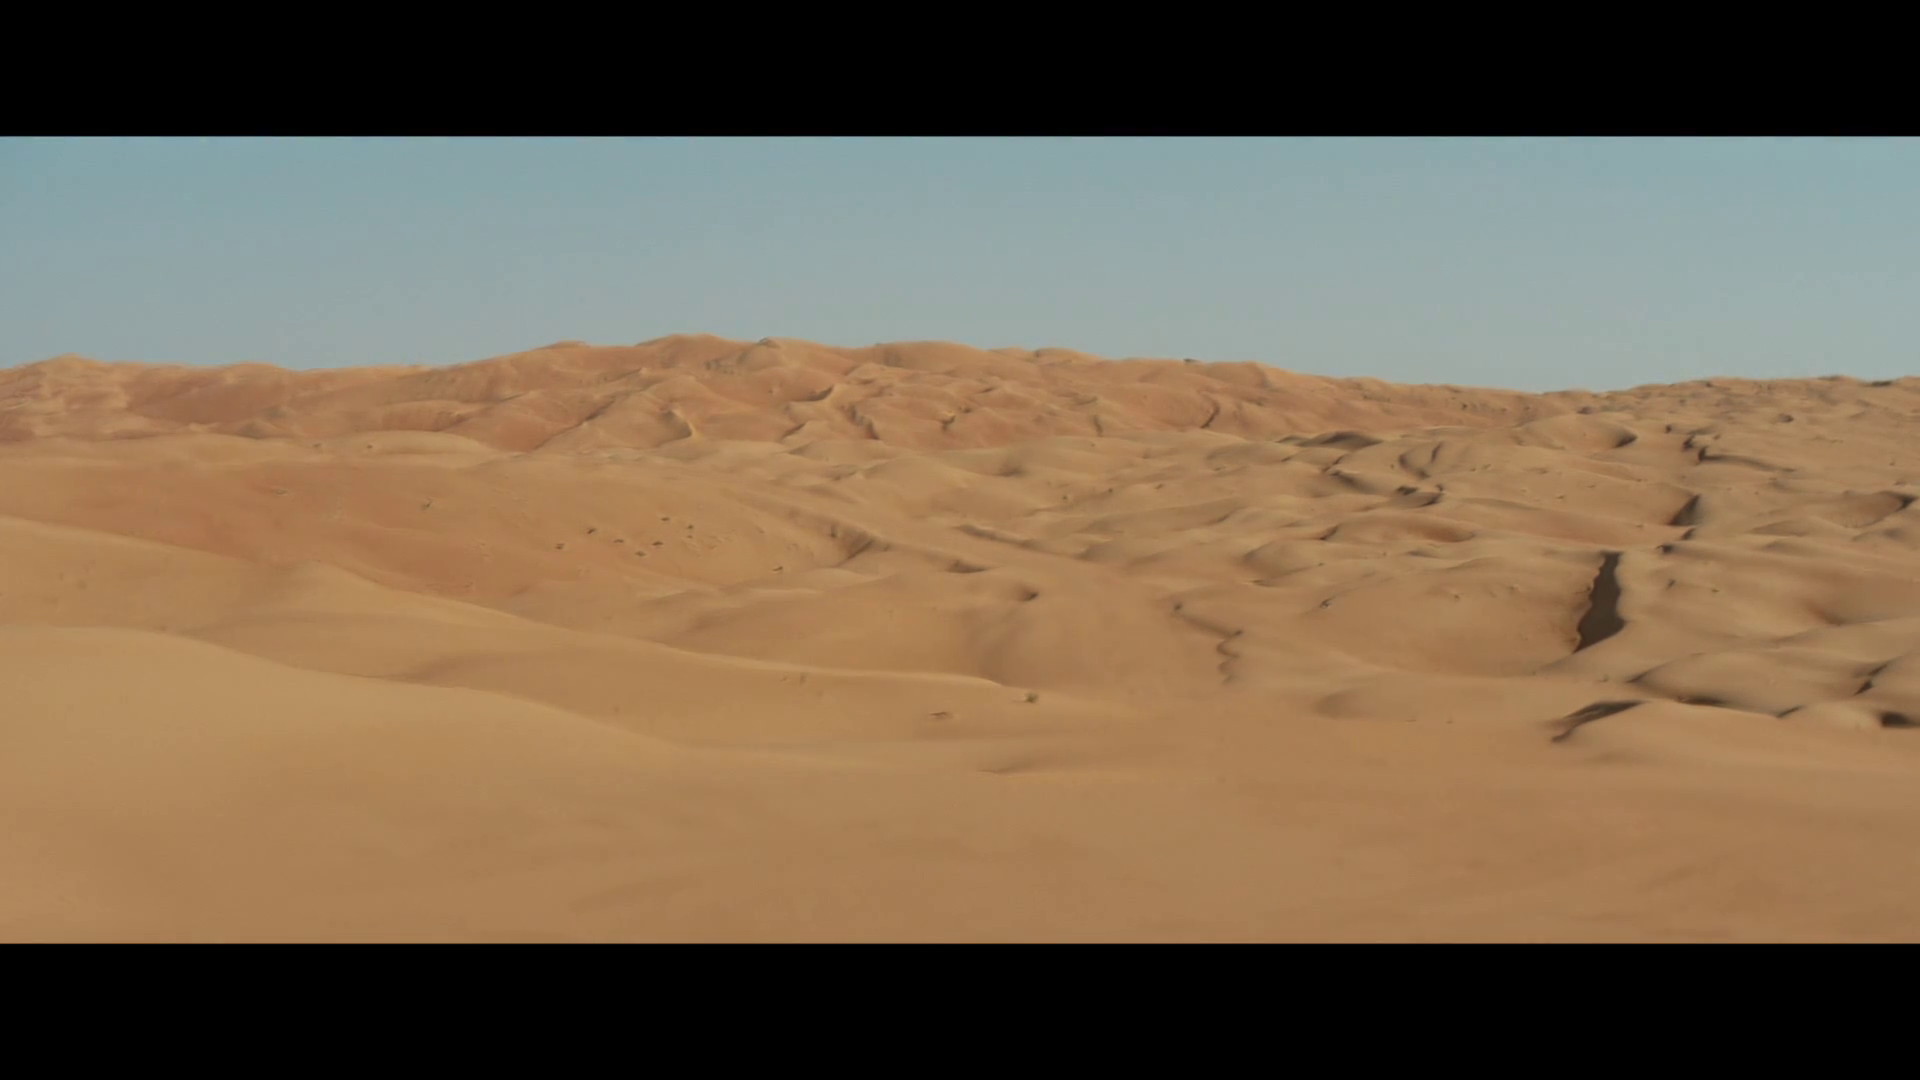 Les images du trailer de Star Wars VII